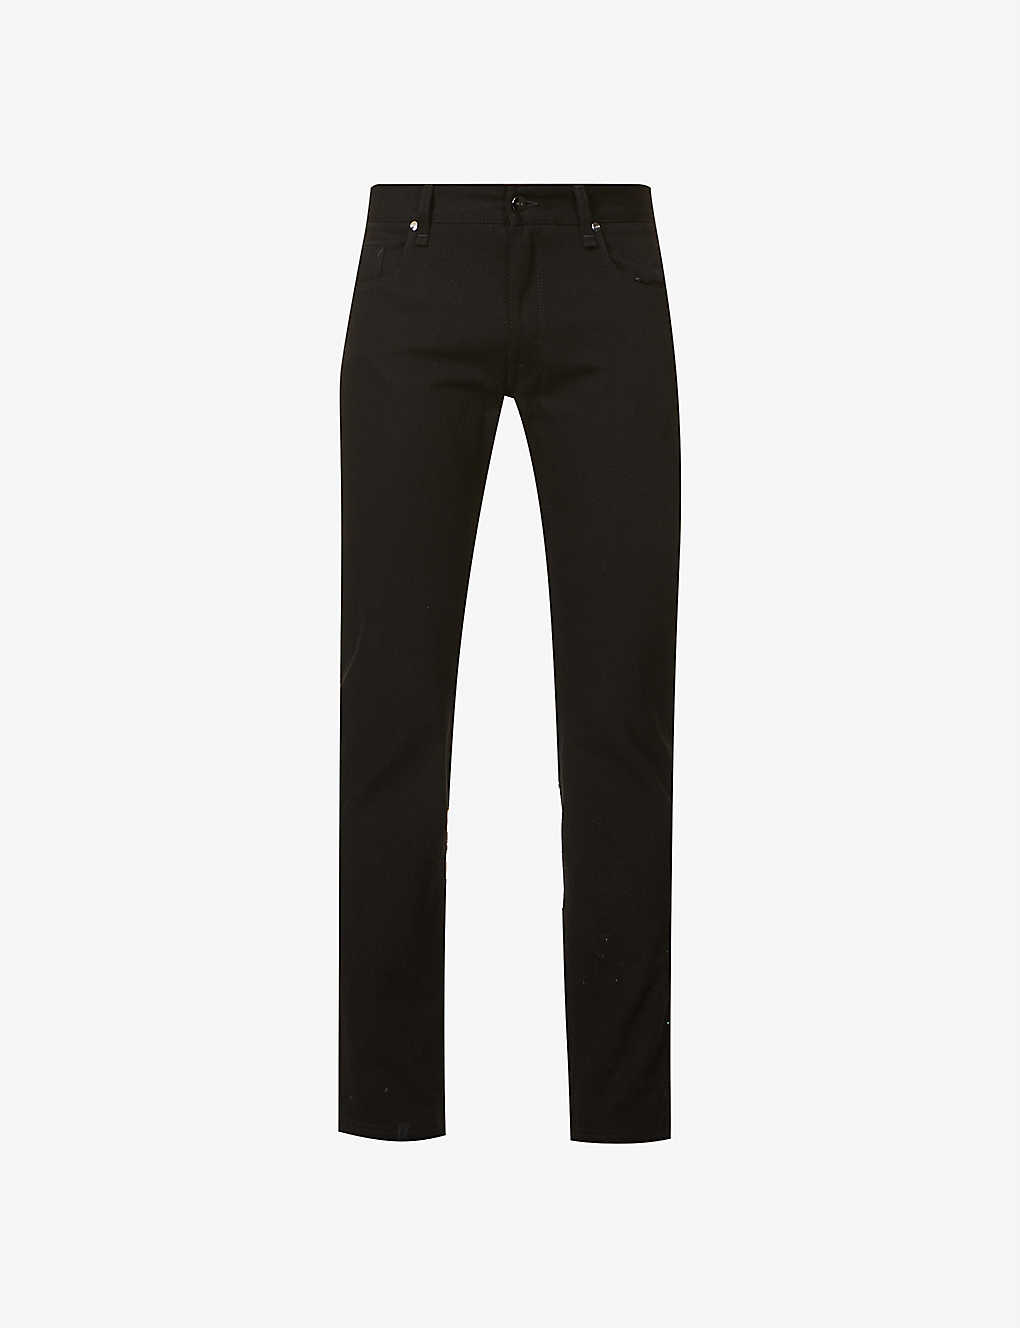 Brand-pattern slim jeans(9188224)